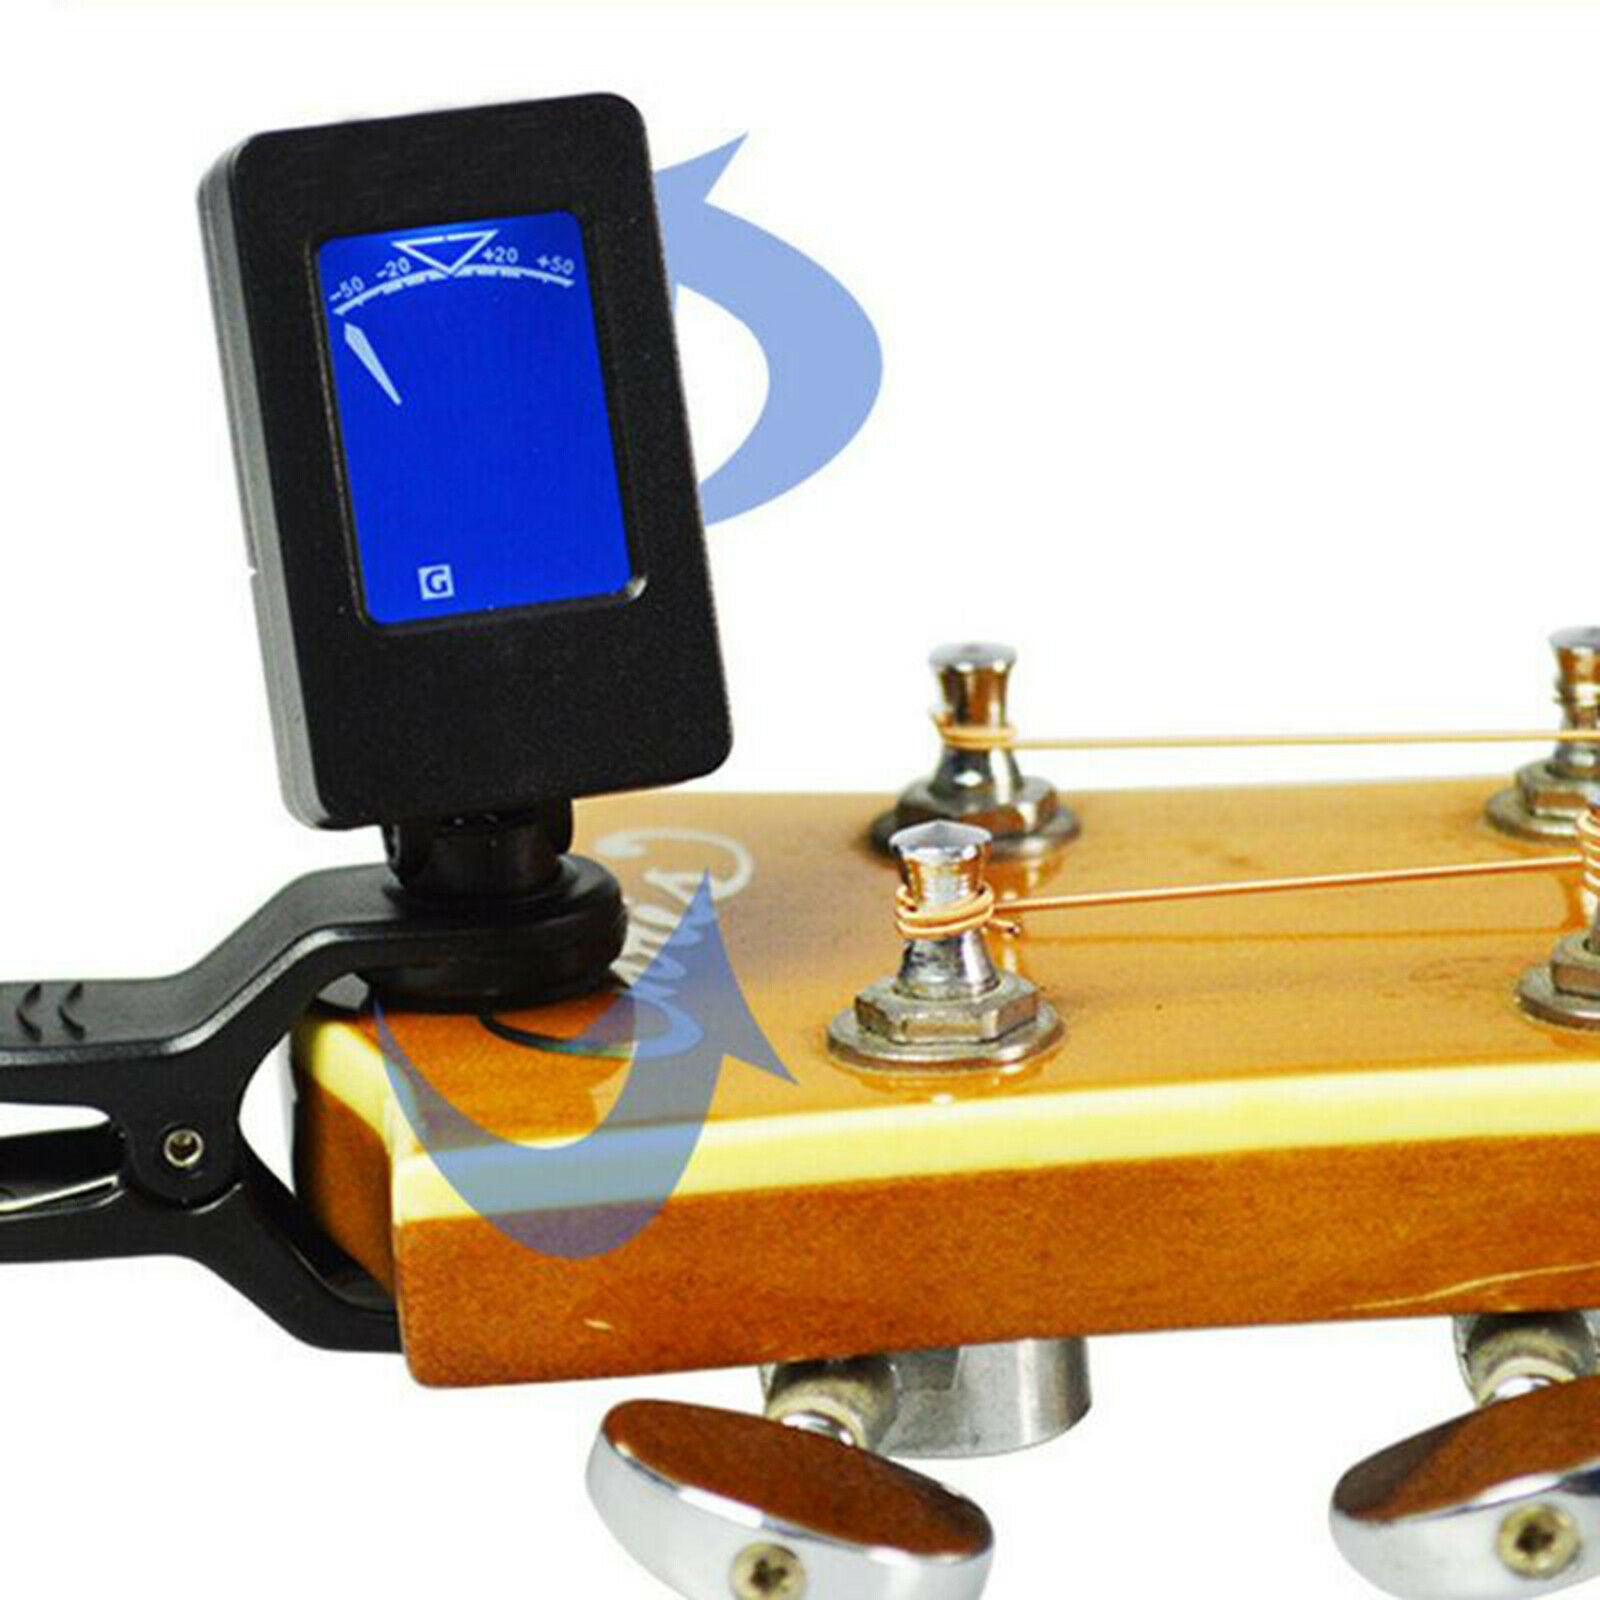 Mini LCD Screen Acoustic Guitar Tuner Clip Chromatic Instrument Ukulele